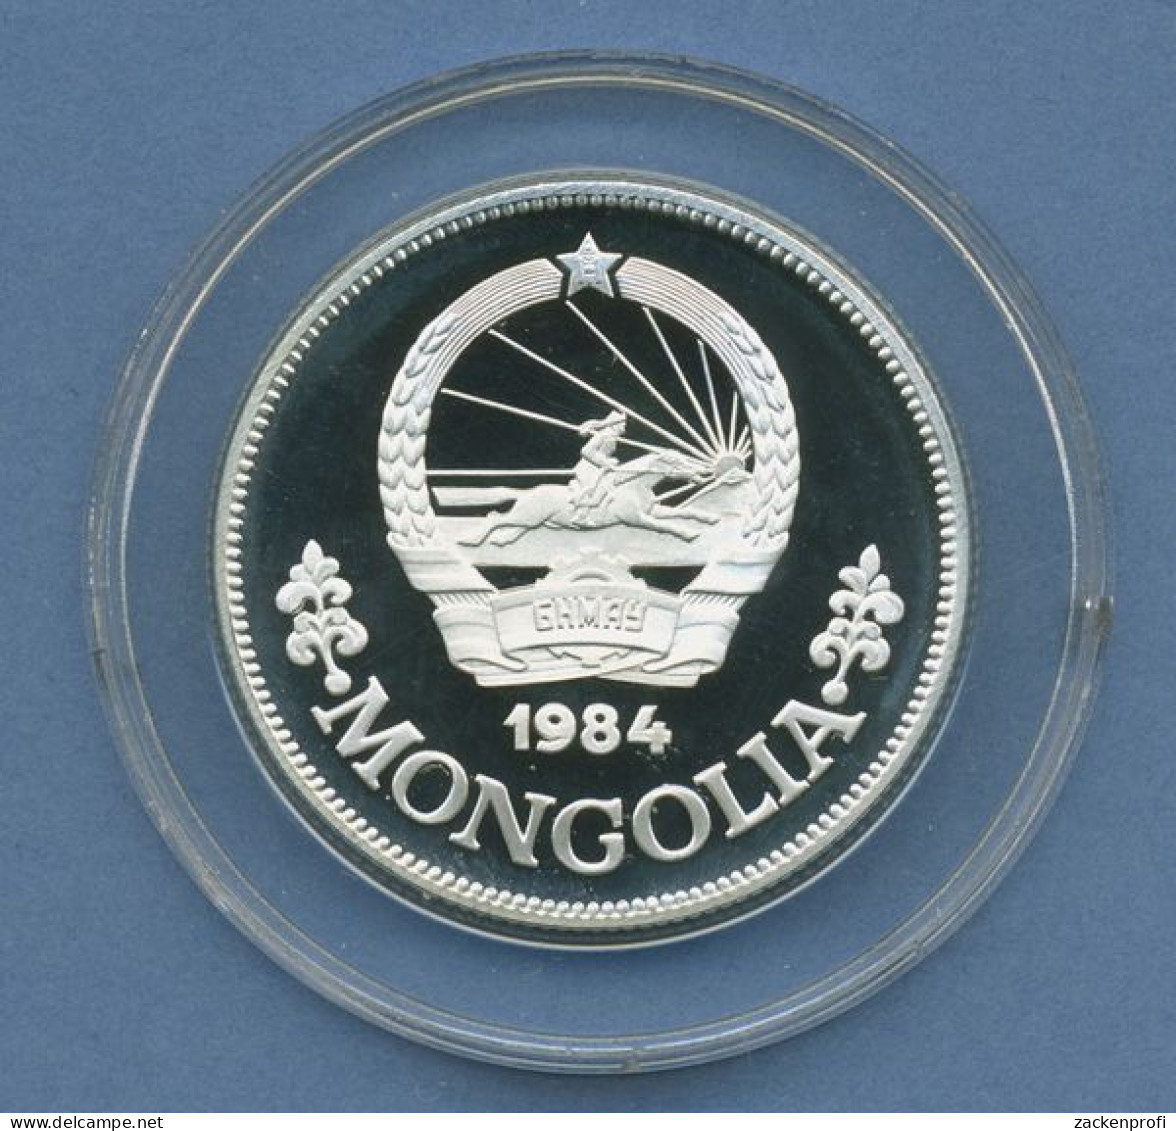 Mongolei 25 Tugrik 1984 Frauendekade Frau, Kind, Silber, KM 47 PP Kapsel (m4379) - Mongolei